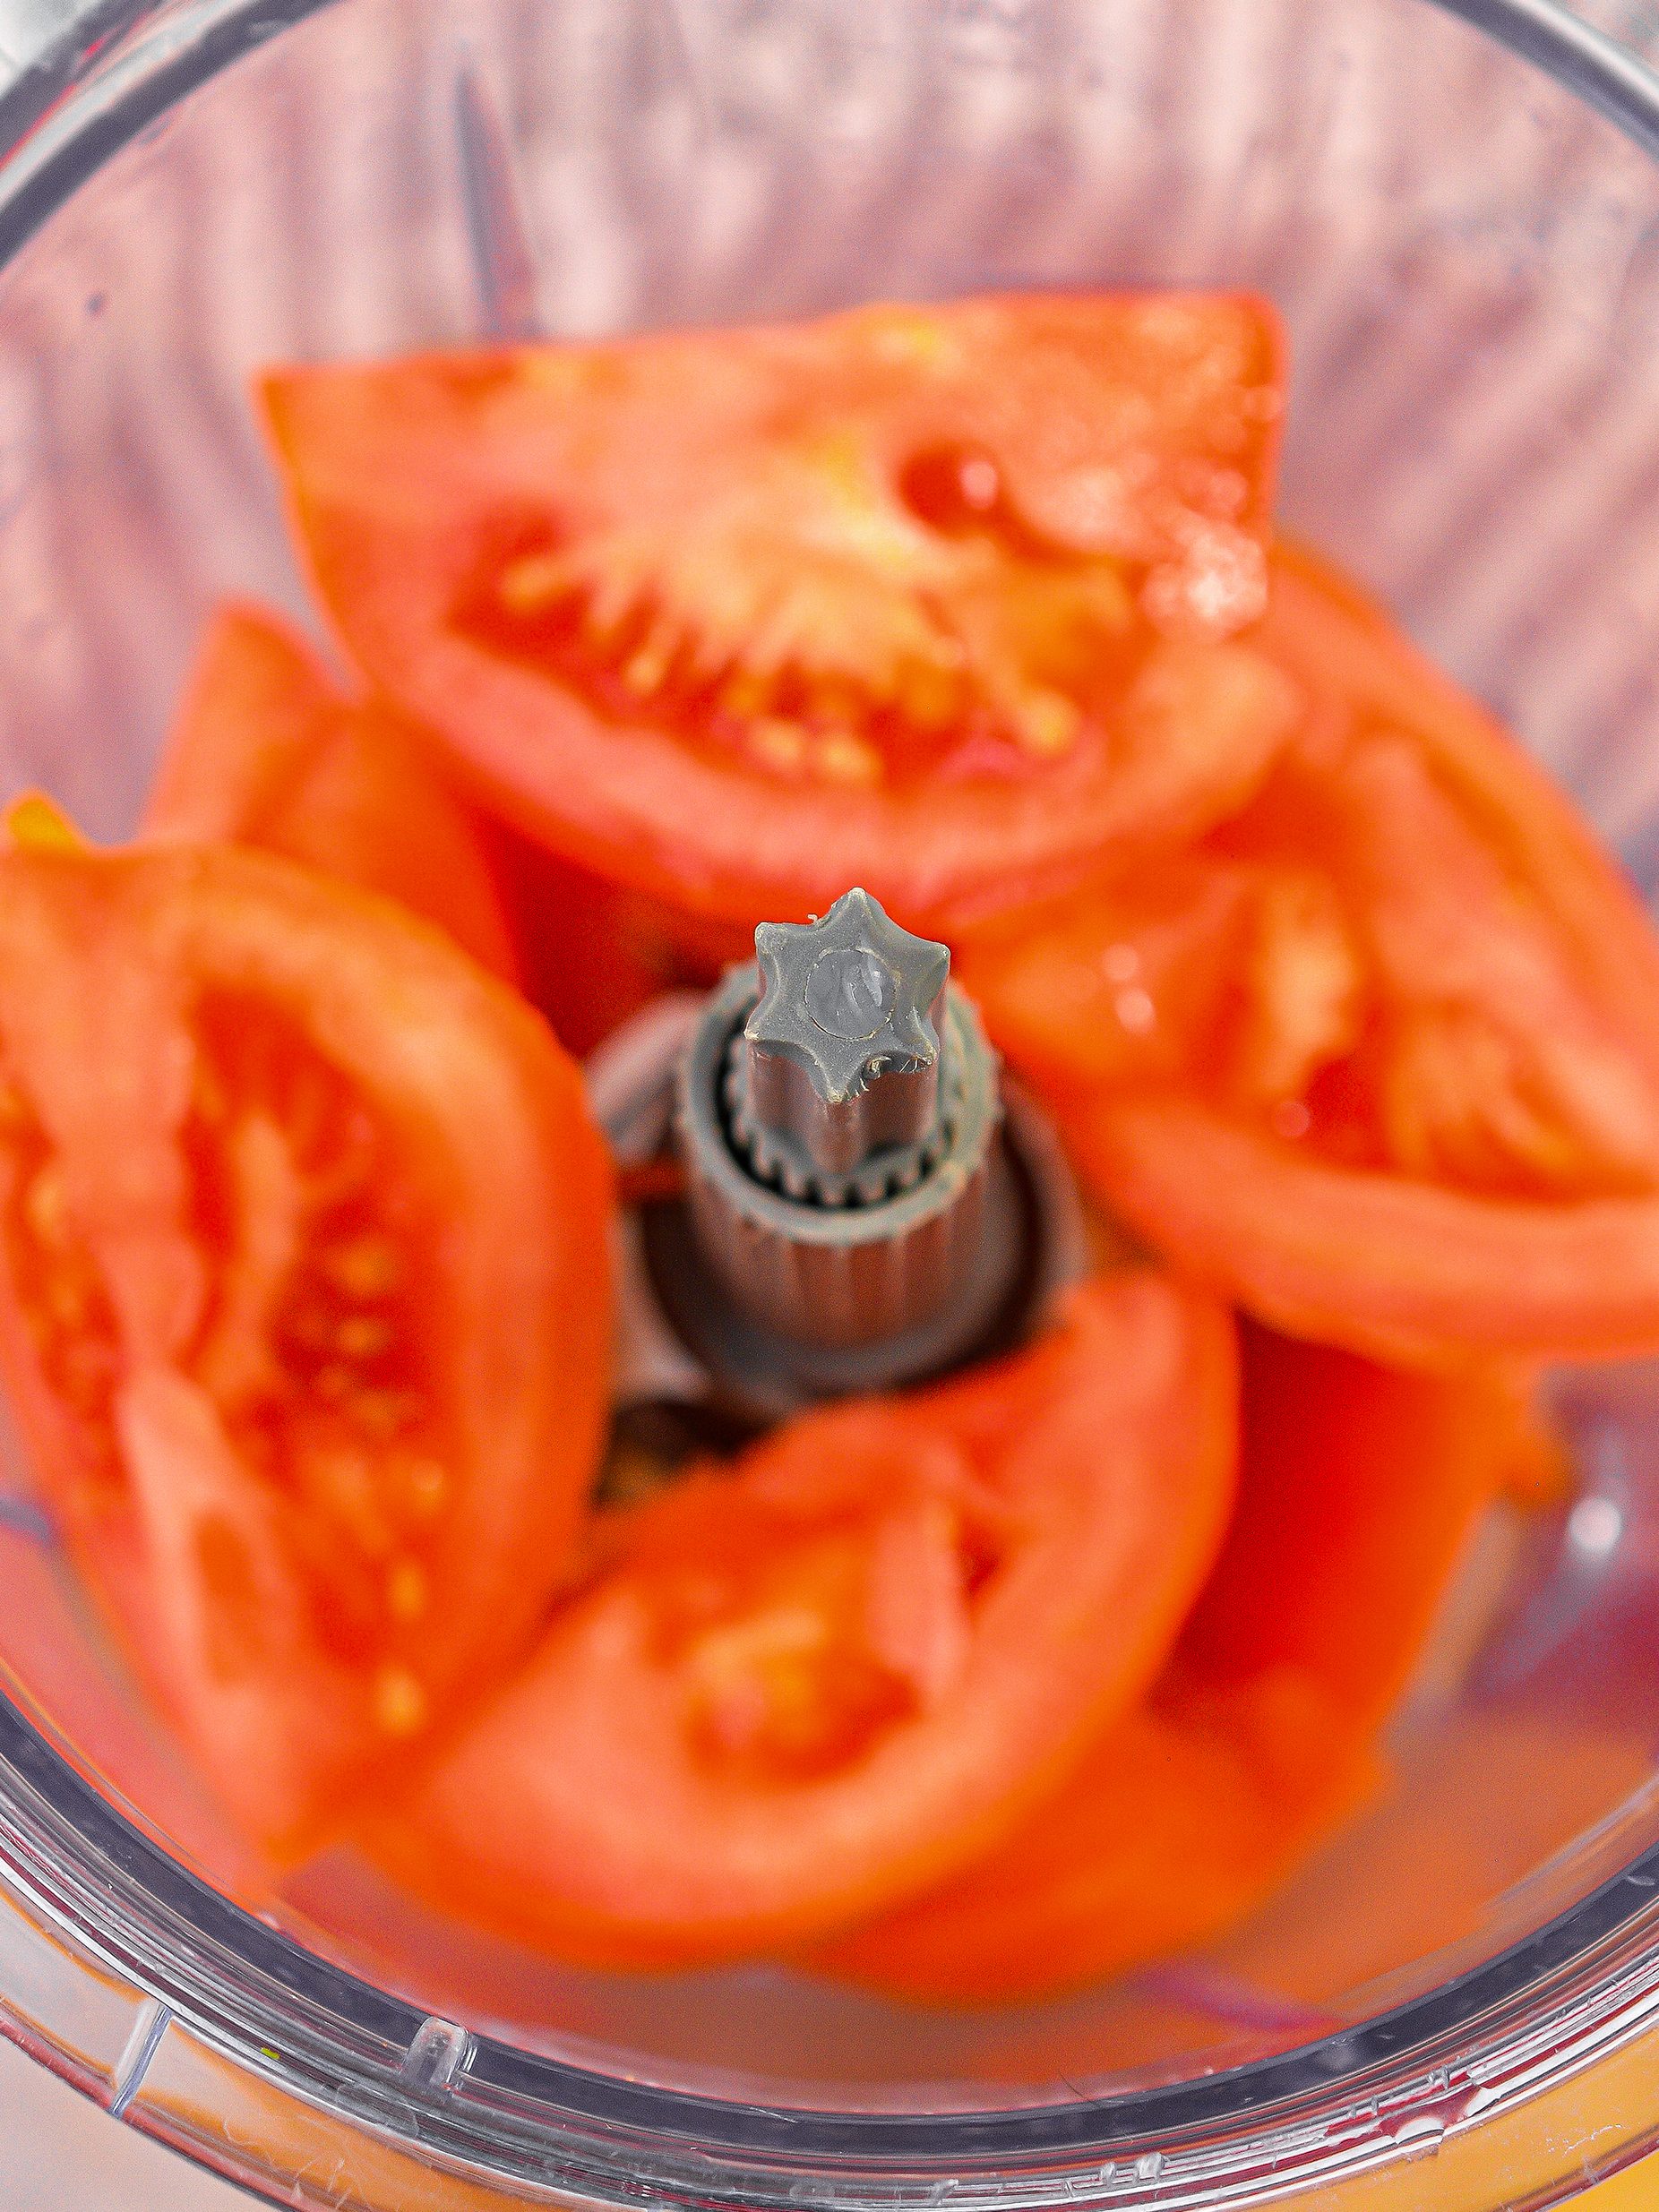 Adding tomatoes